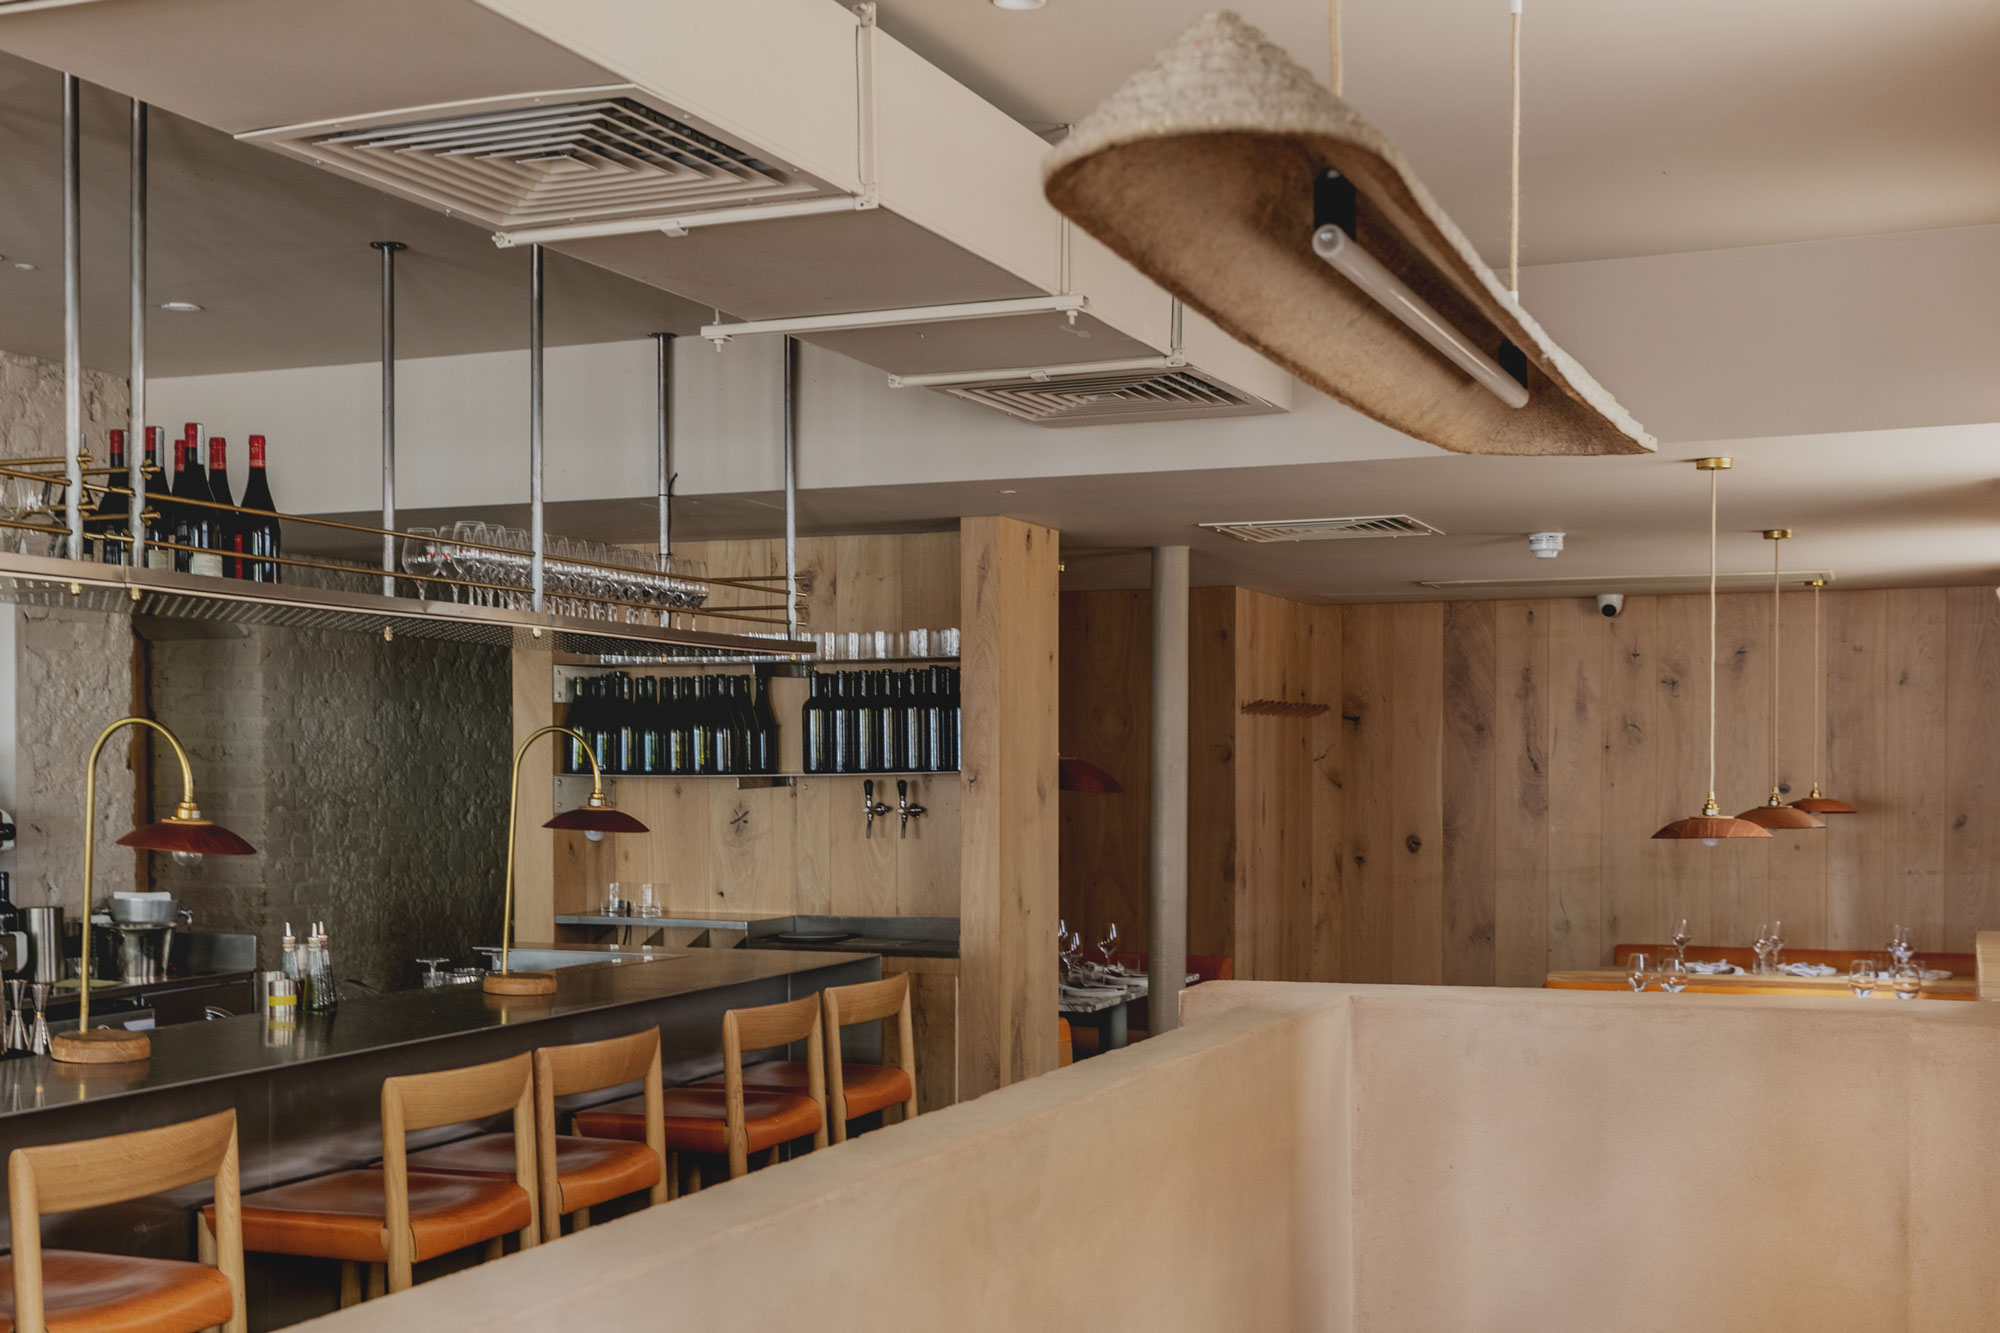 Wooden clad wall in open plan restaurant